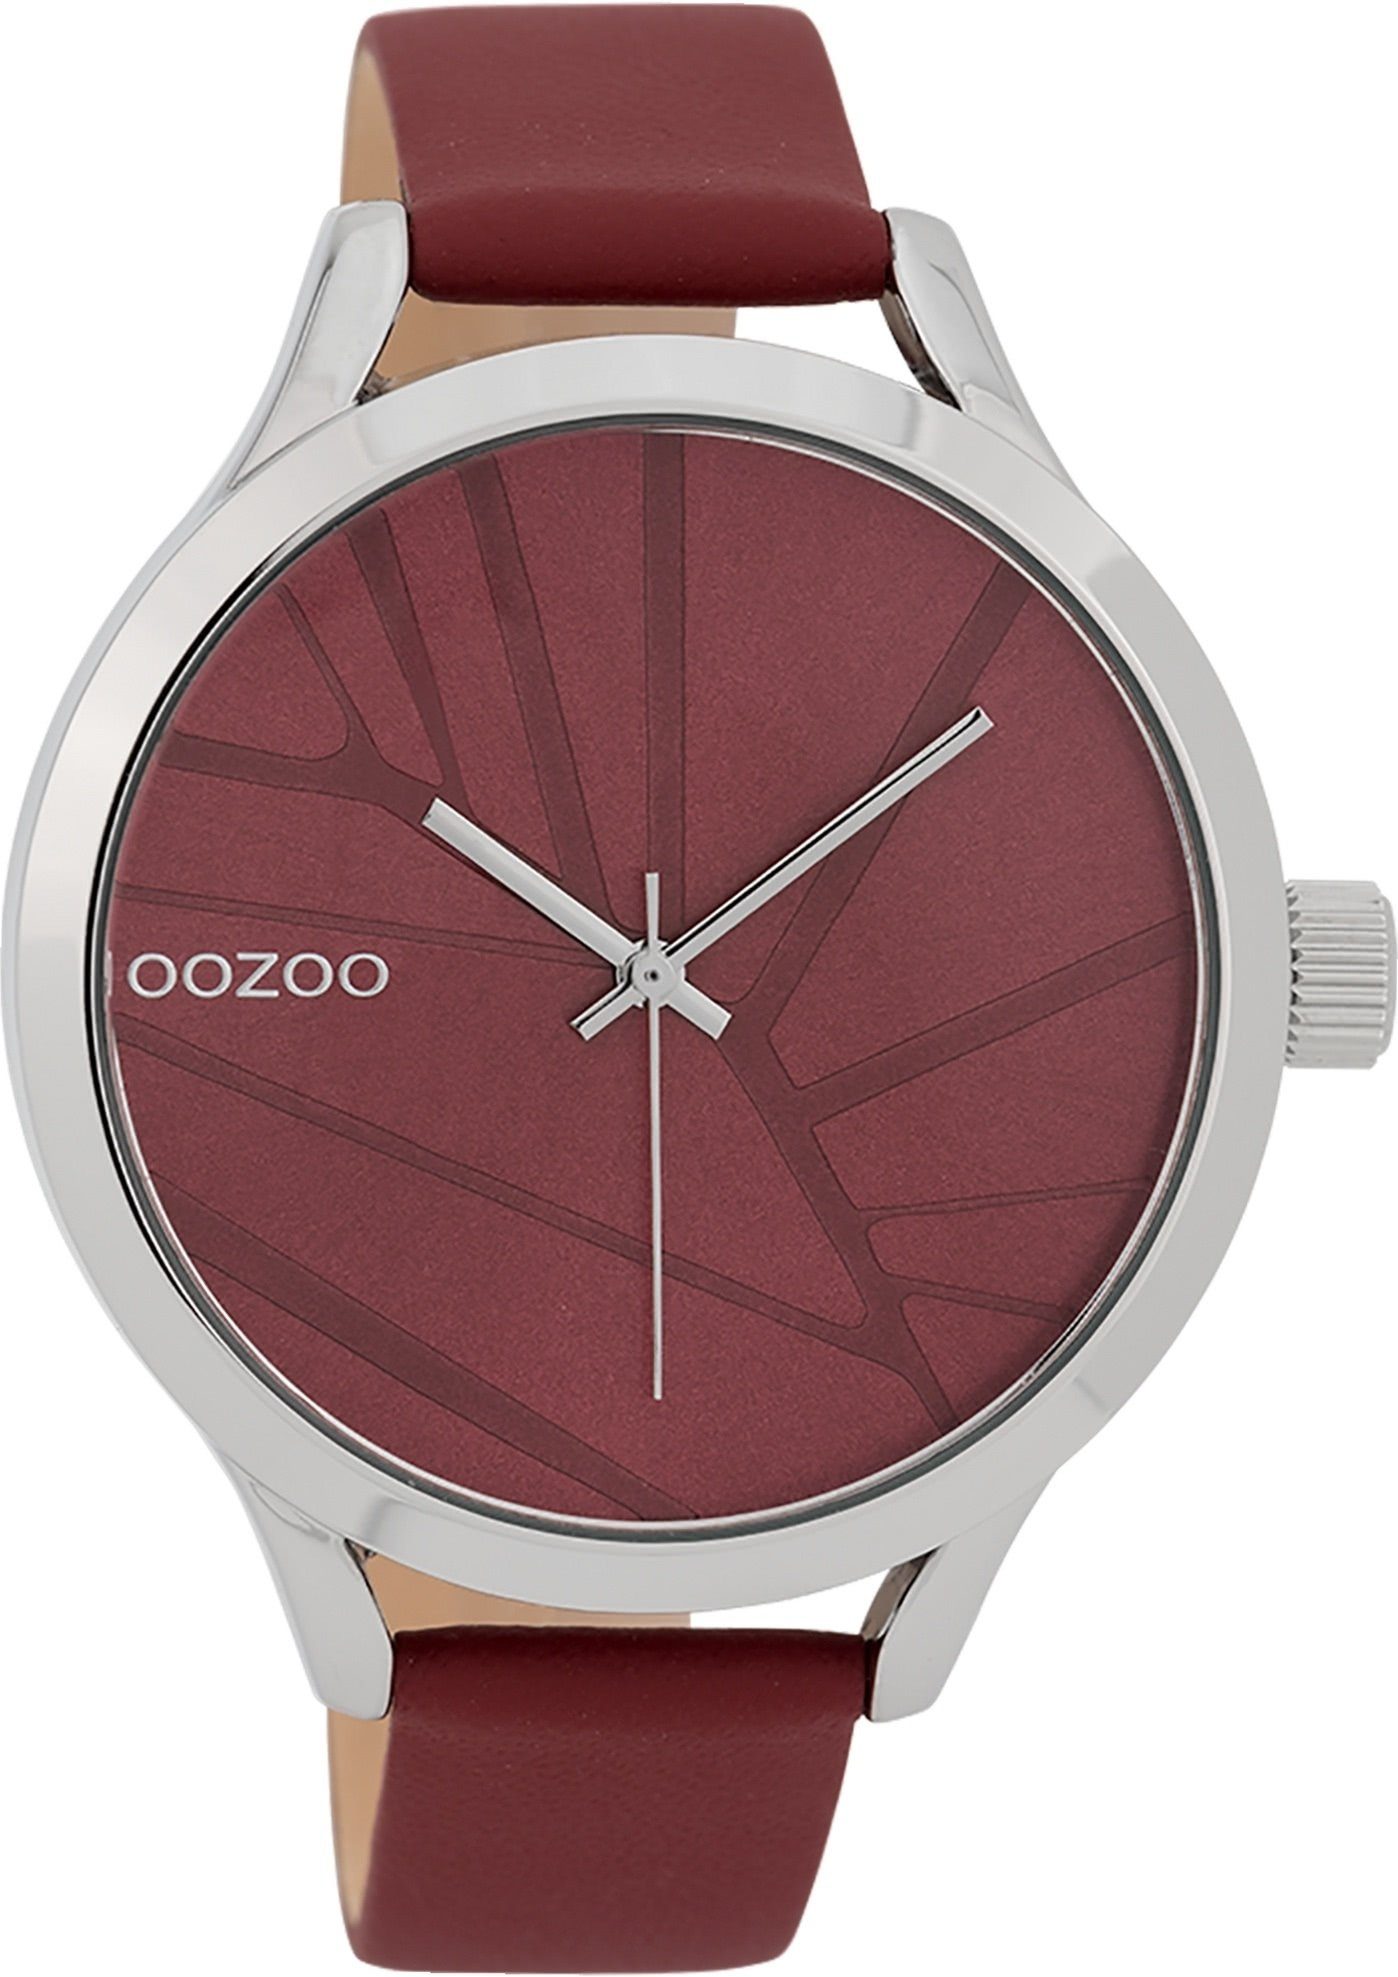 rund, Oozoo OOZOO Quarzuhr 43mm), Armbanduhr Fashion Lederarmband (ca. Timepieces, Damen rot, Damenuhr groß